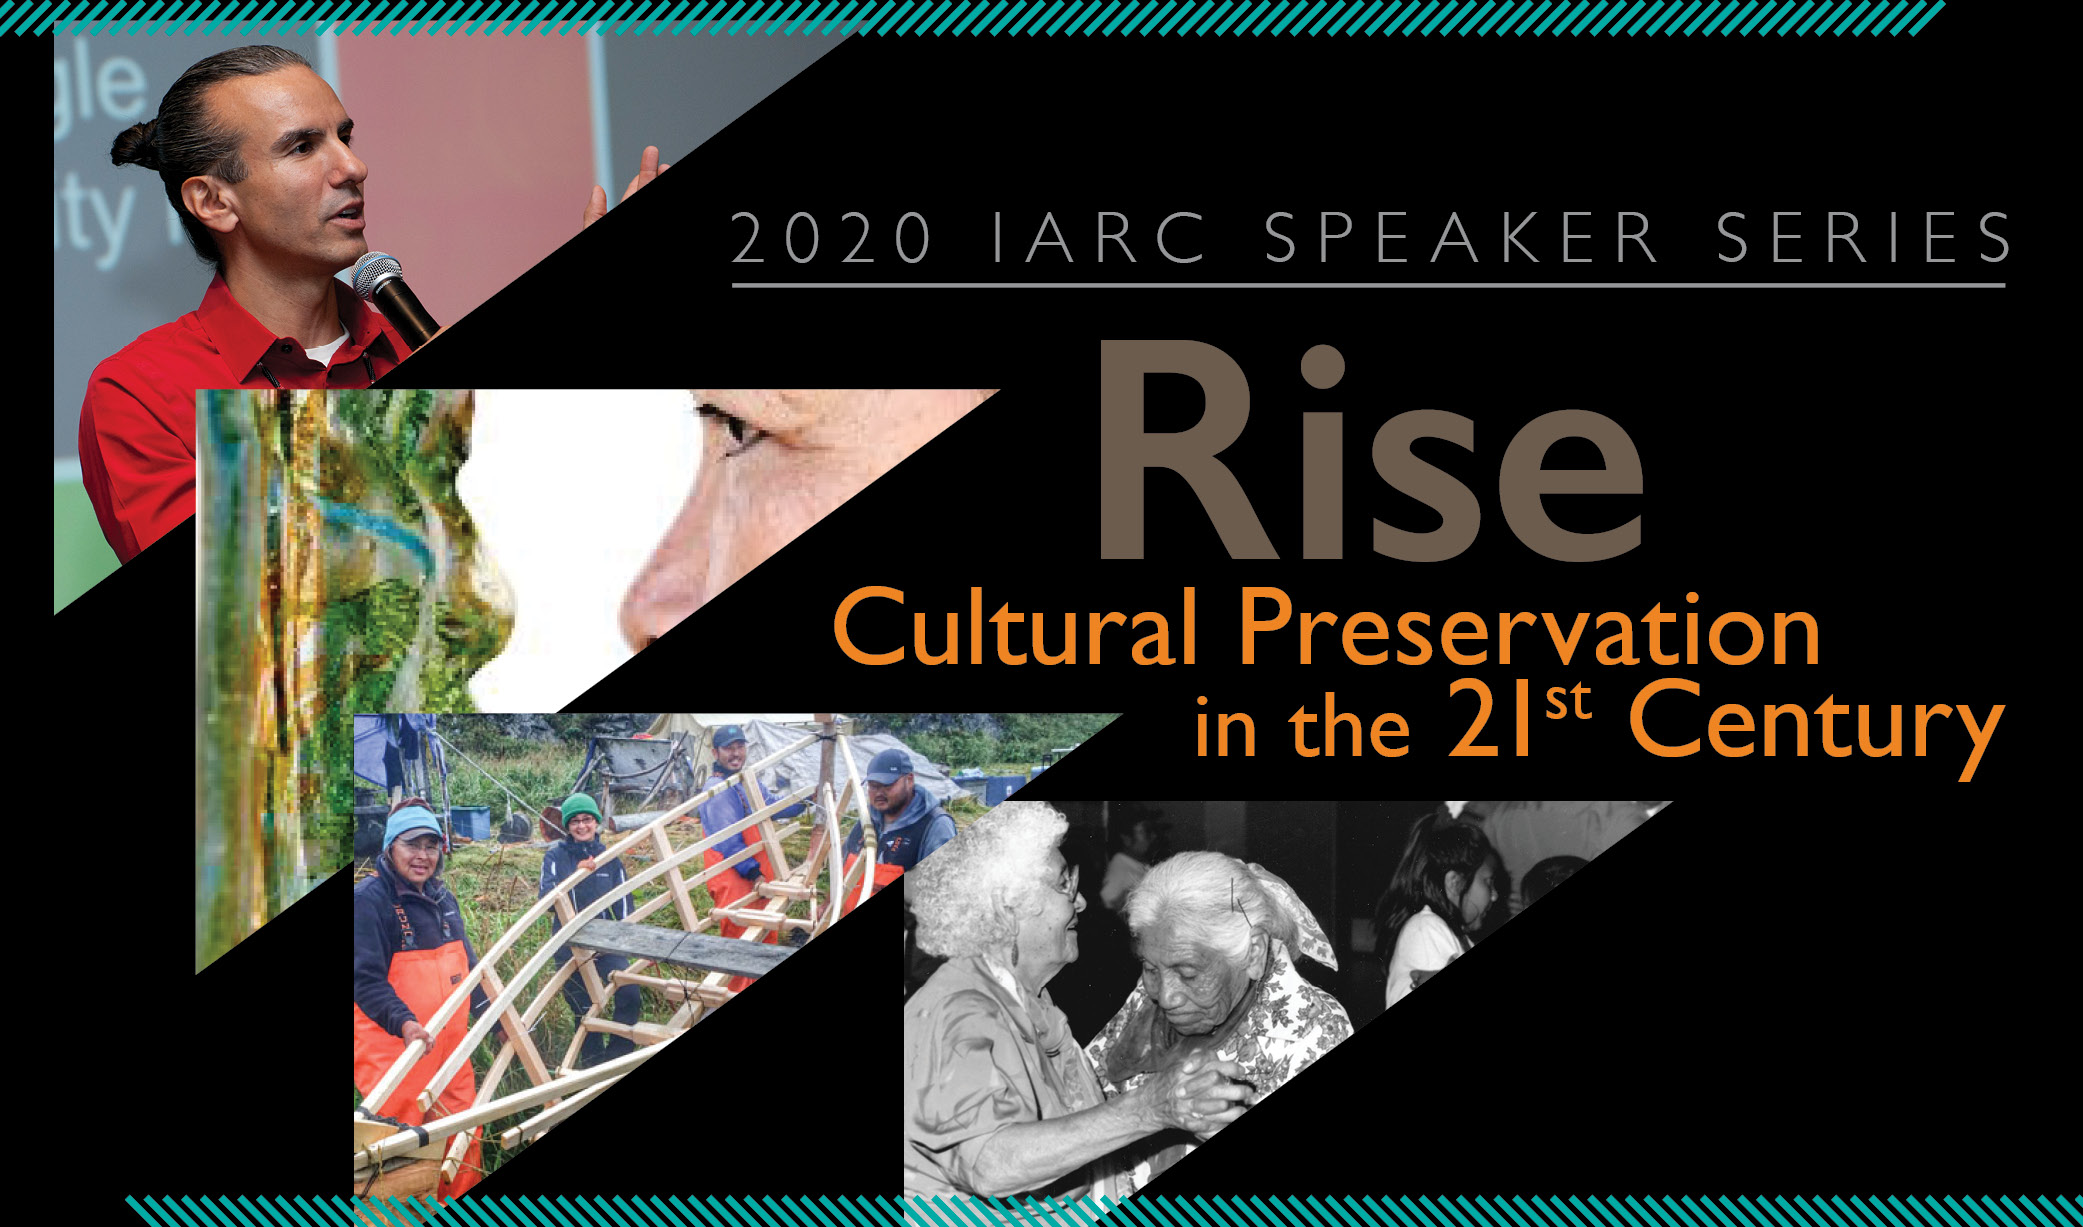 IARC Speaker Series Explores Indigenous-Based Cultural Preservation